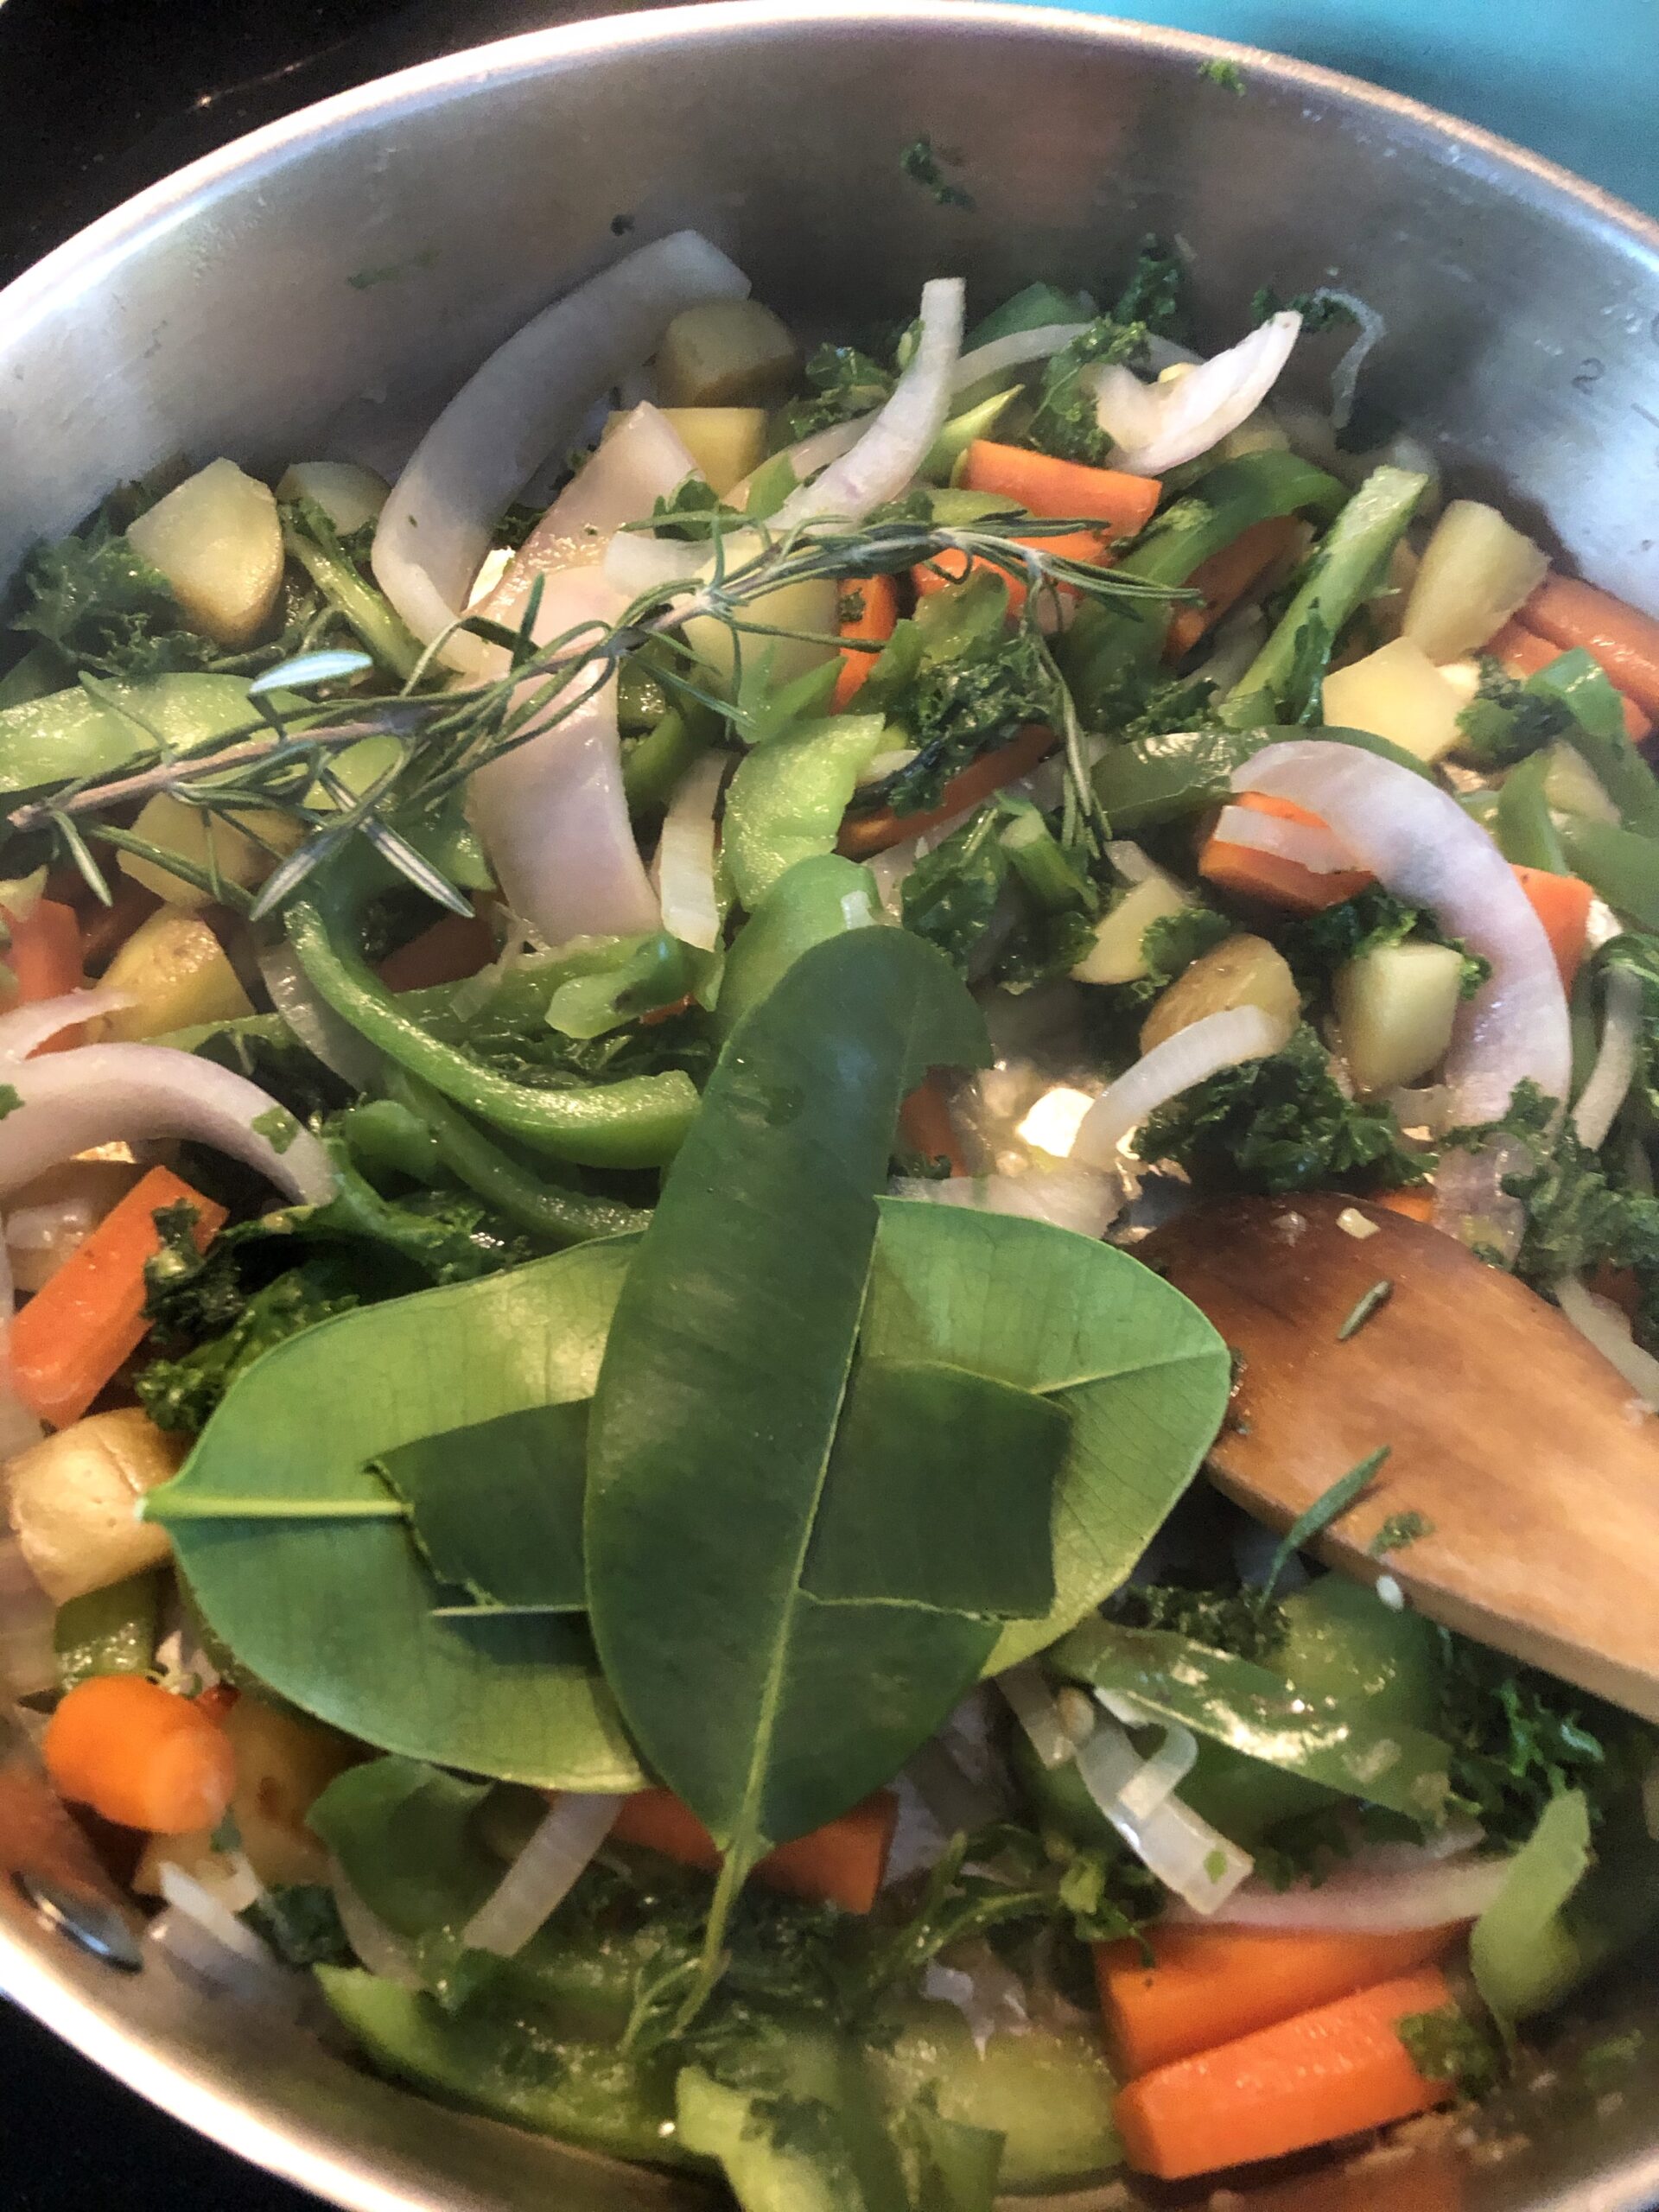 Added veggies and herbs